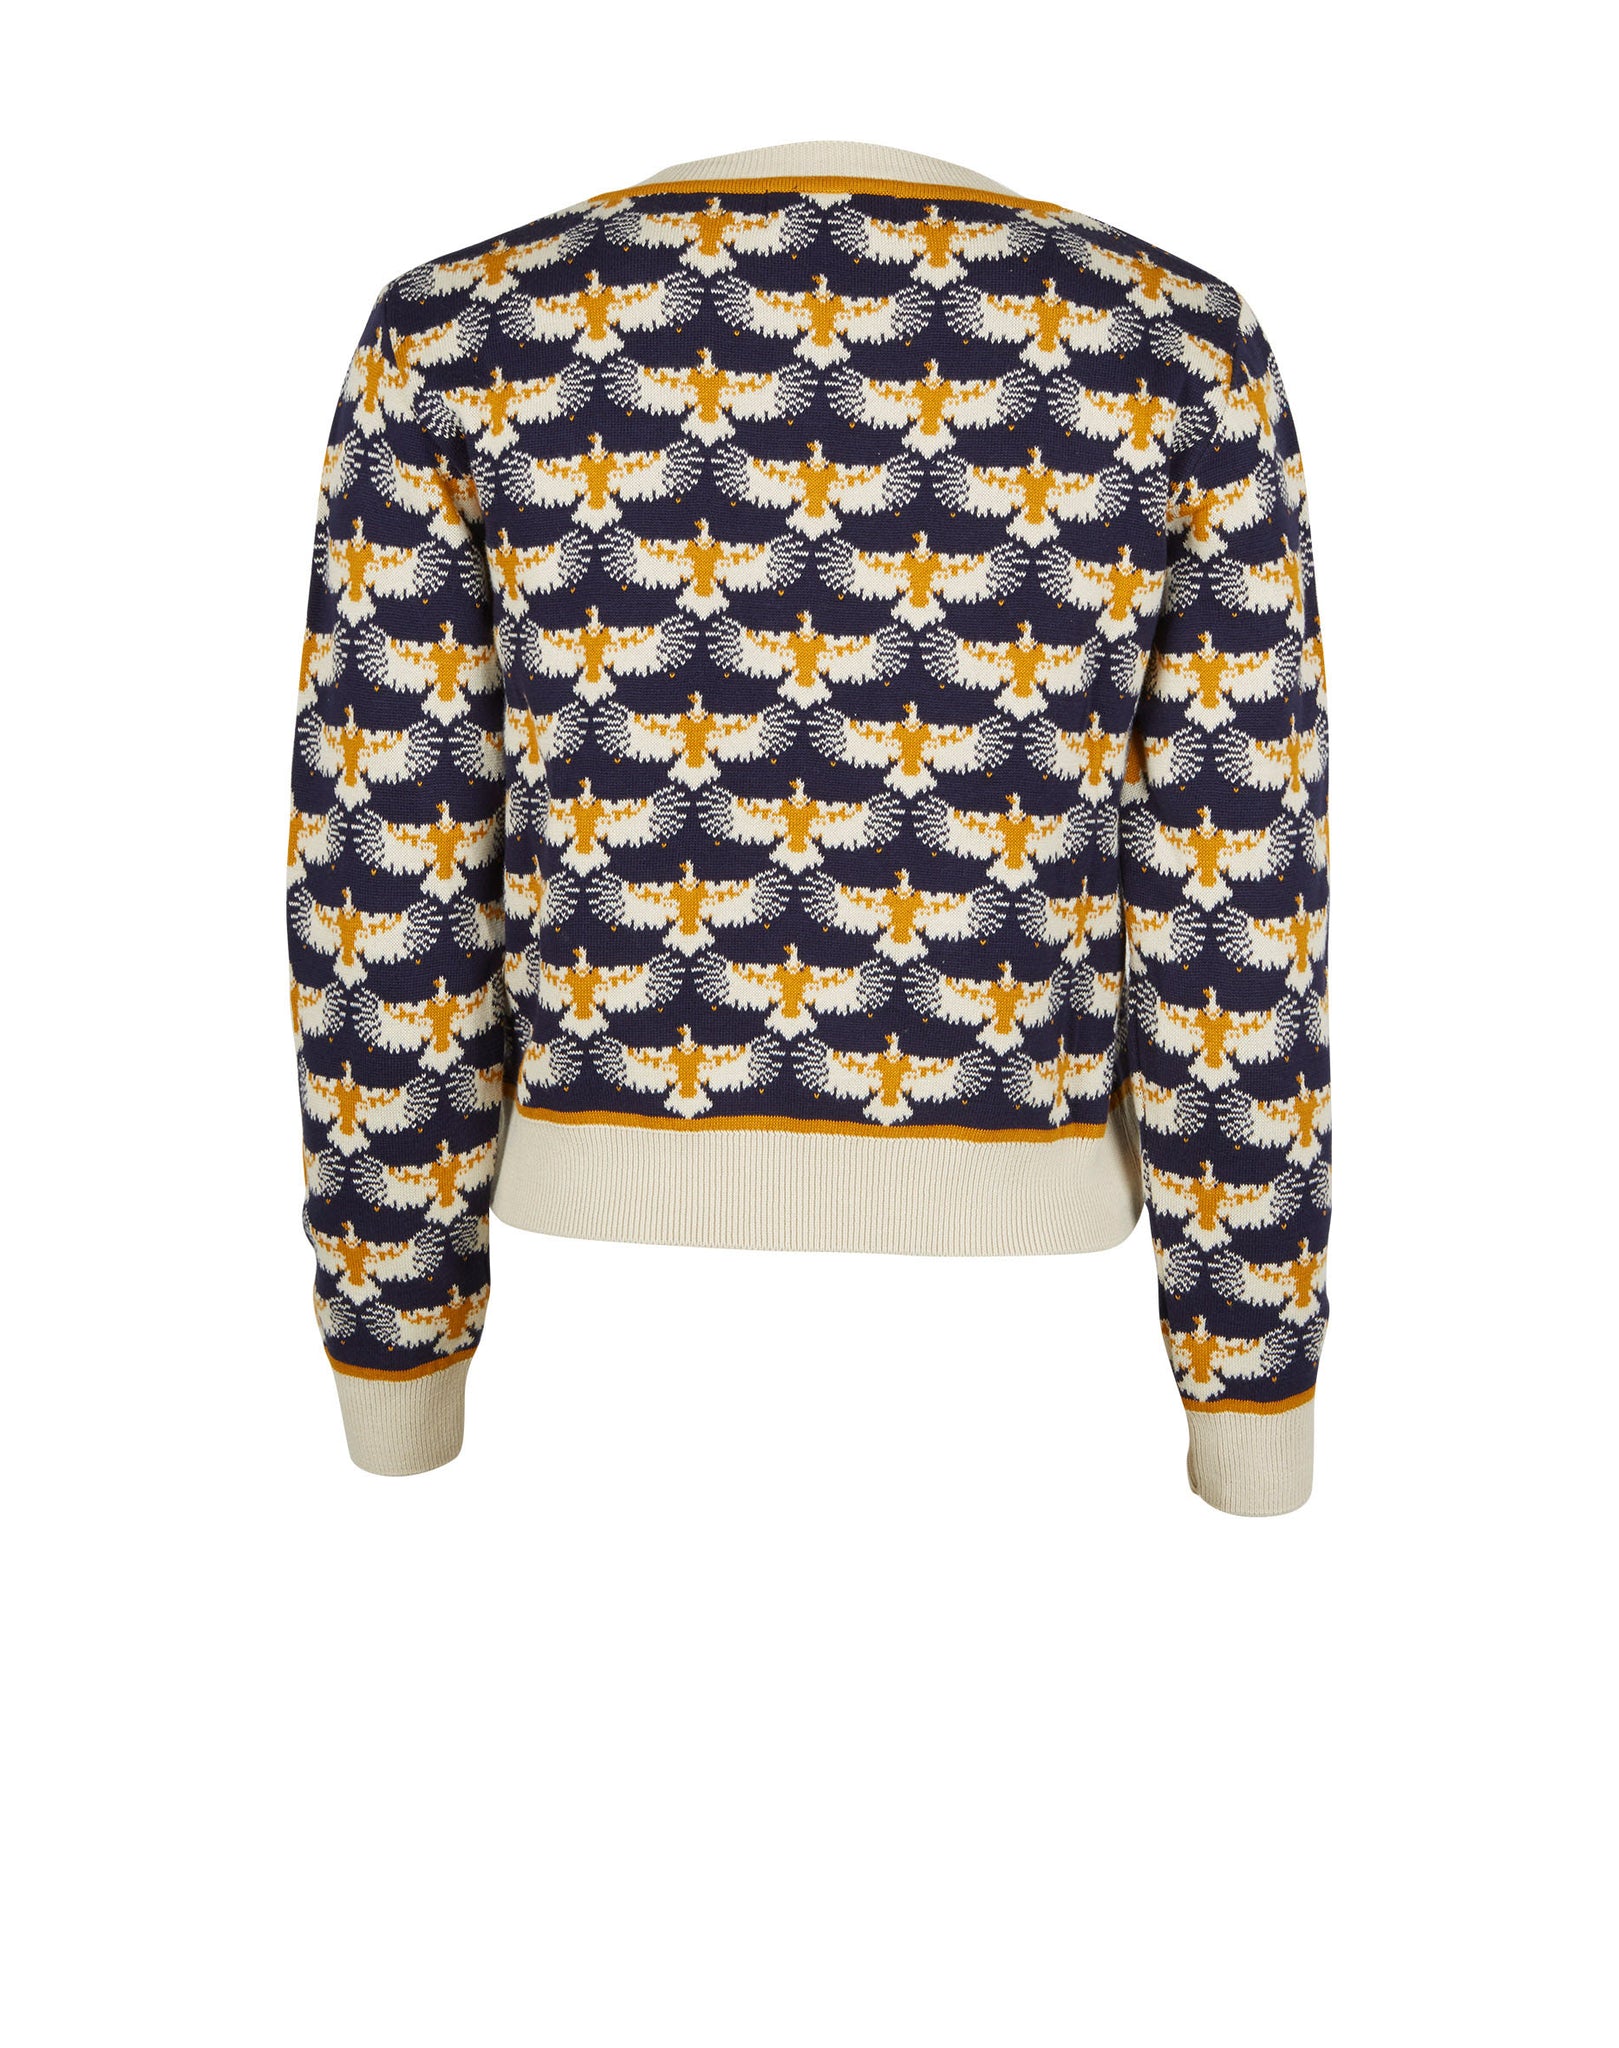 Louis Vuitton Jacquard Monogram Sweater REVIEW 